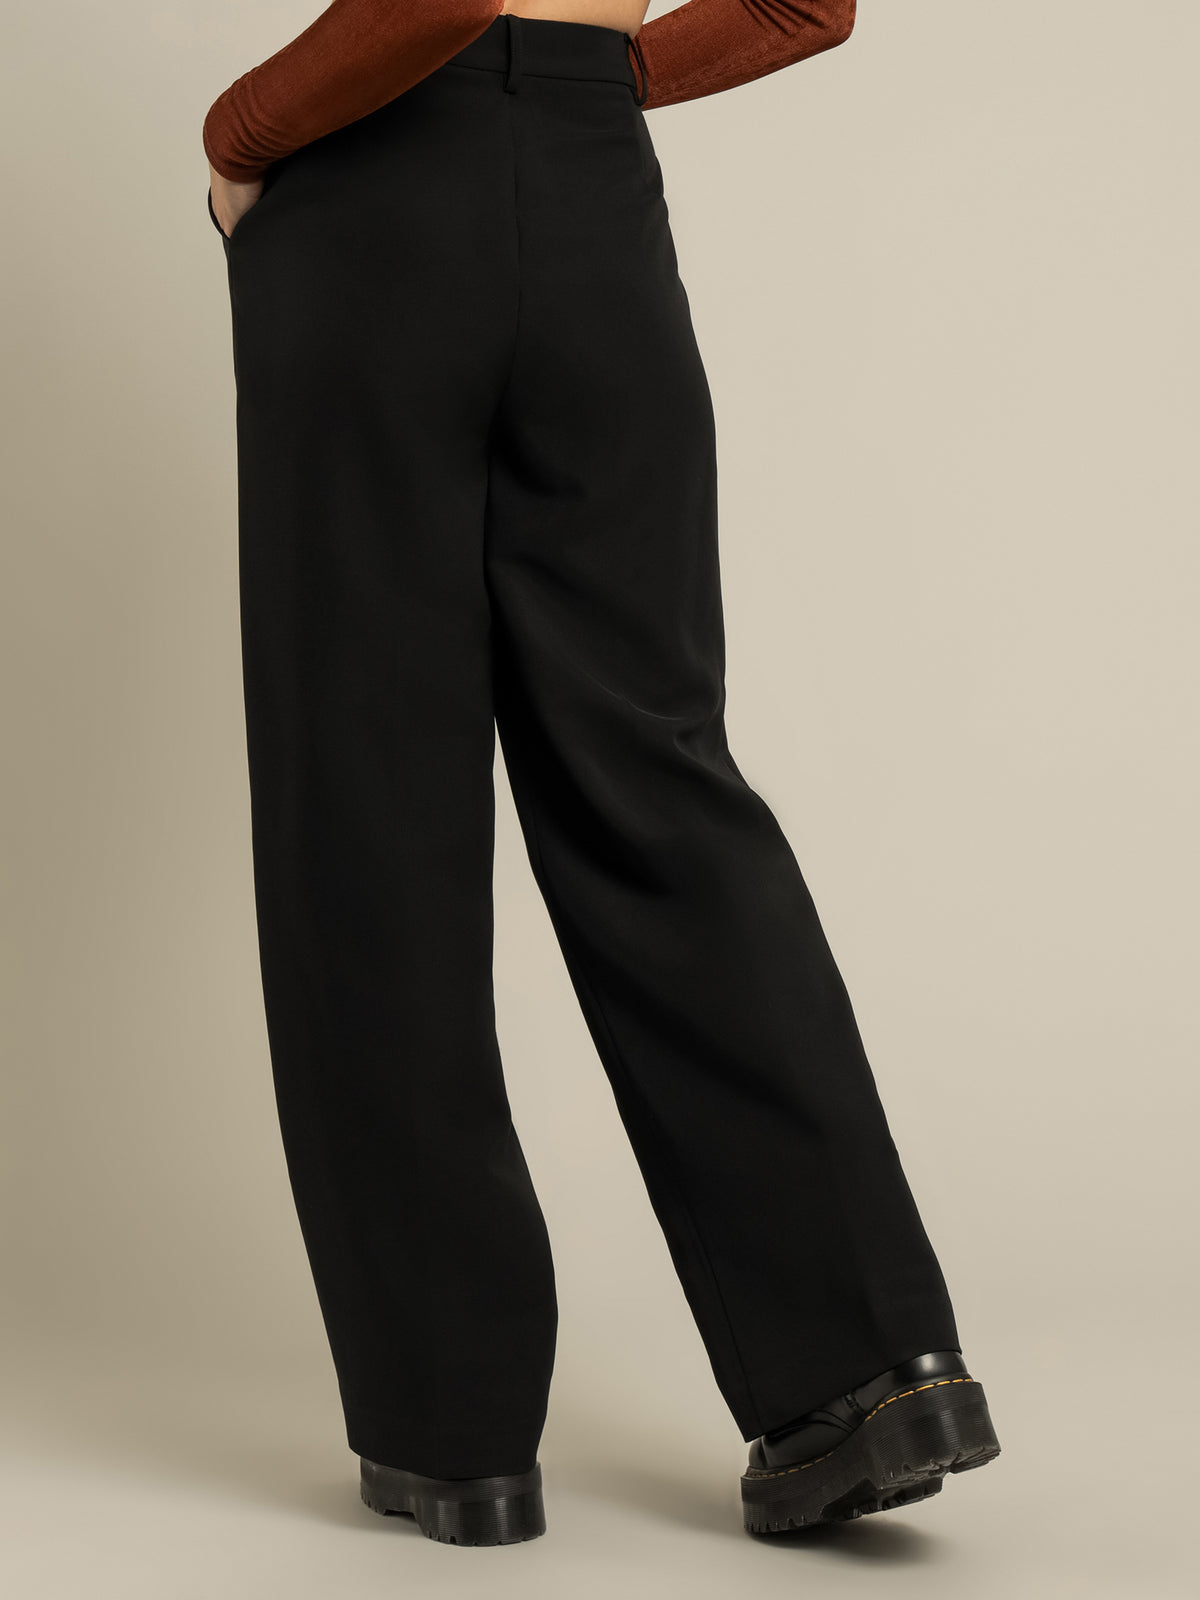 Claudia Longline Tailored Pant in Black